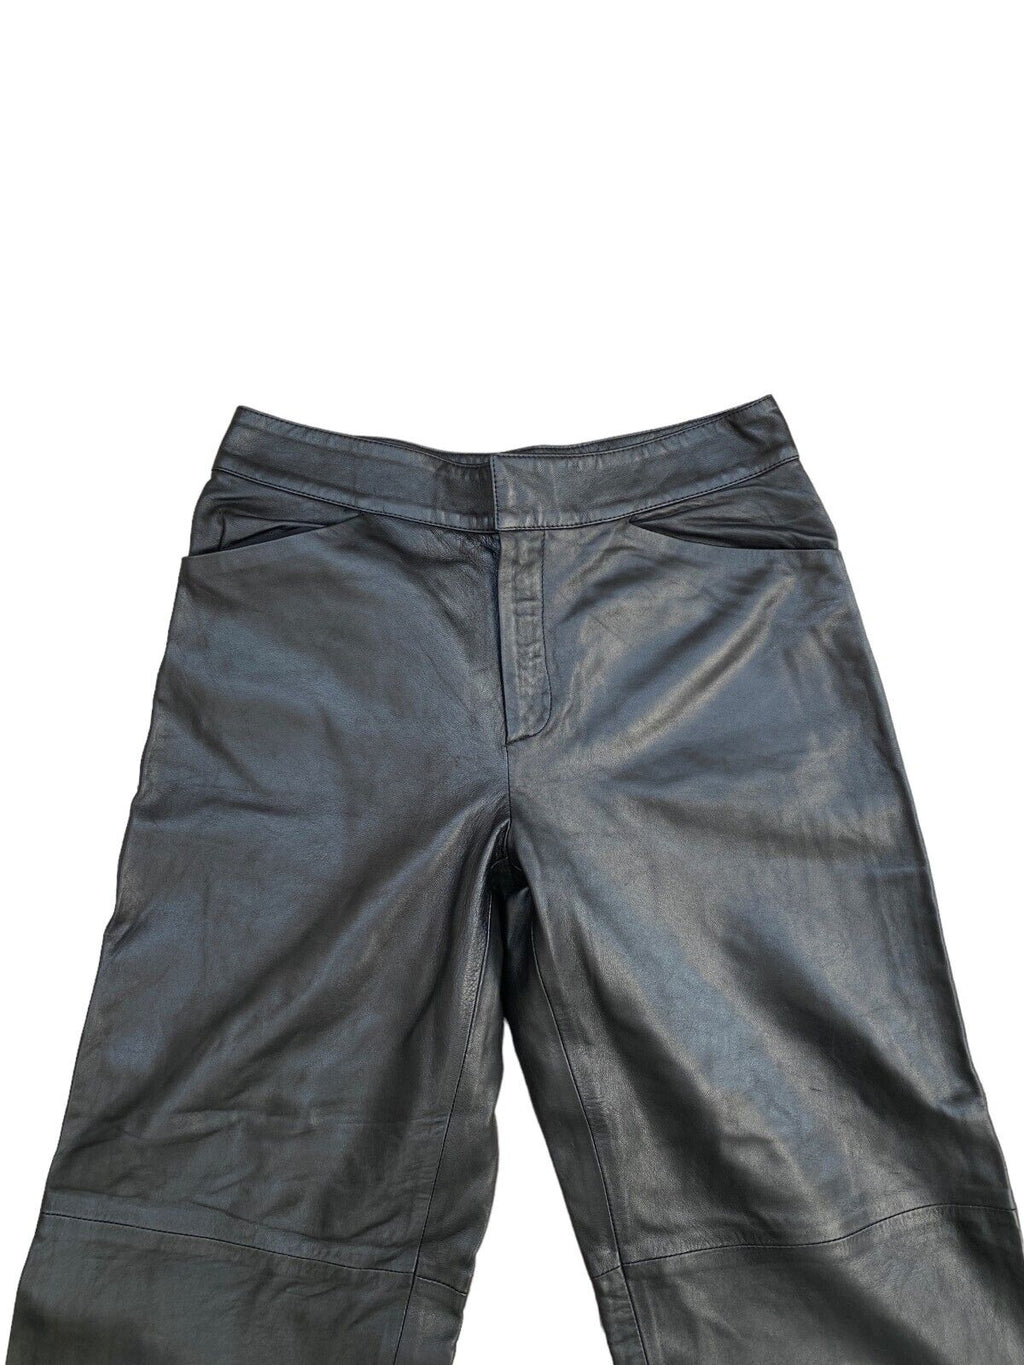 High Waist Black Leather Pants Biker Leather Pants